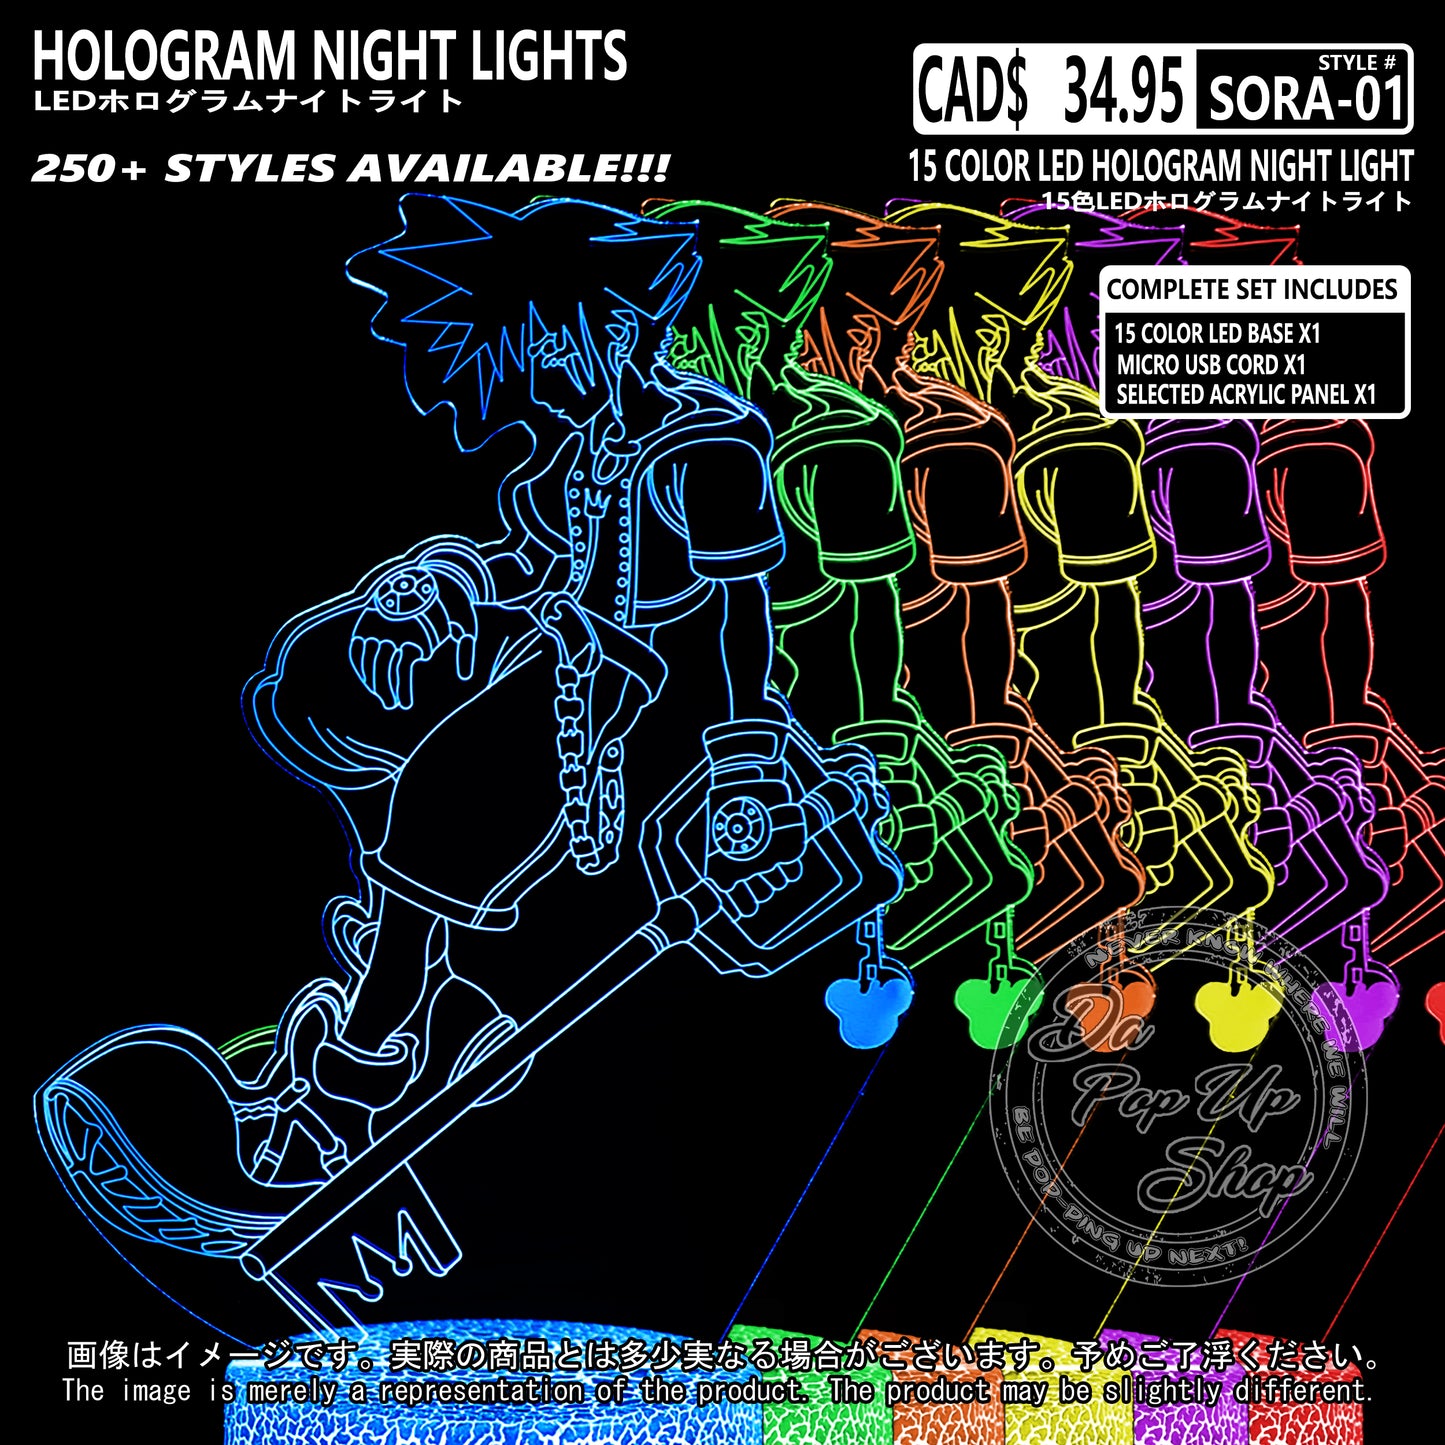 (SORA-01) Kindgom Hearts Hologram LED Night Light